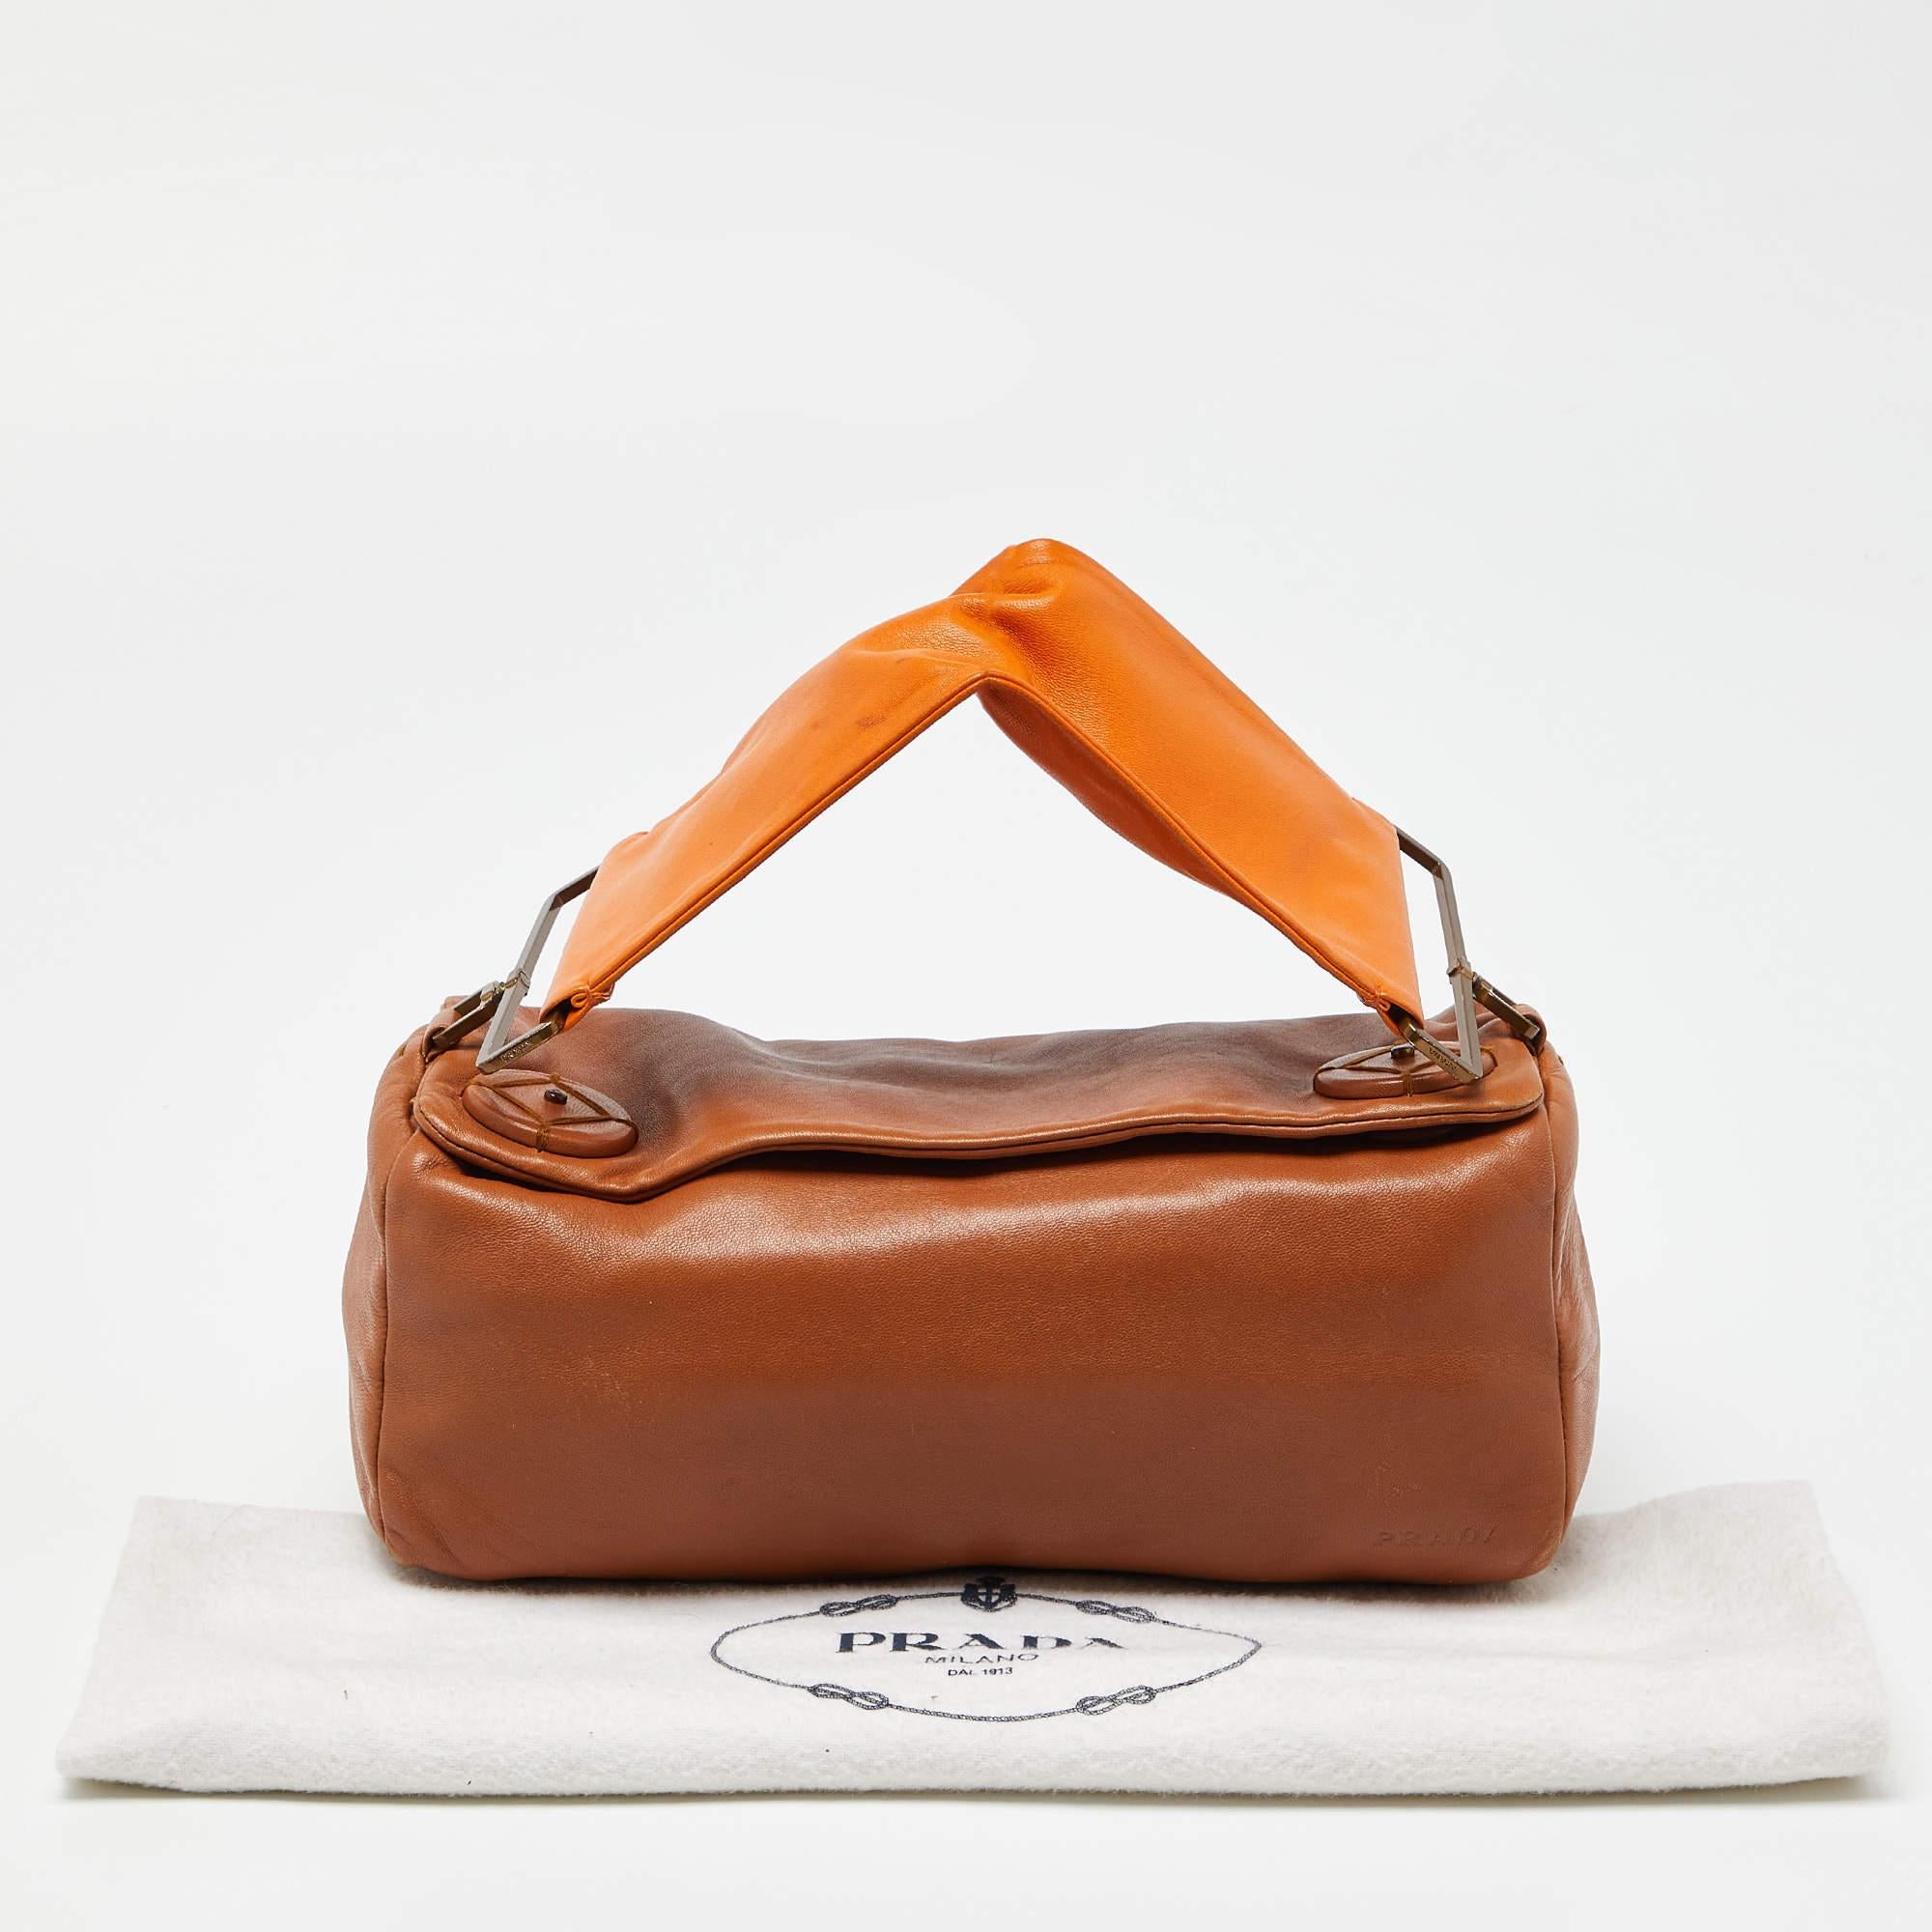 Prada Tan/Orange Leather Satchel For Sale 7